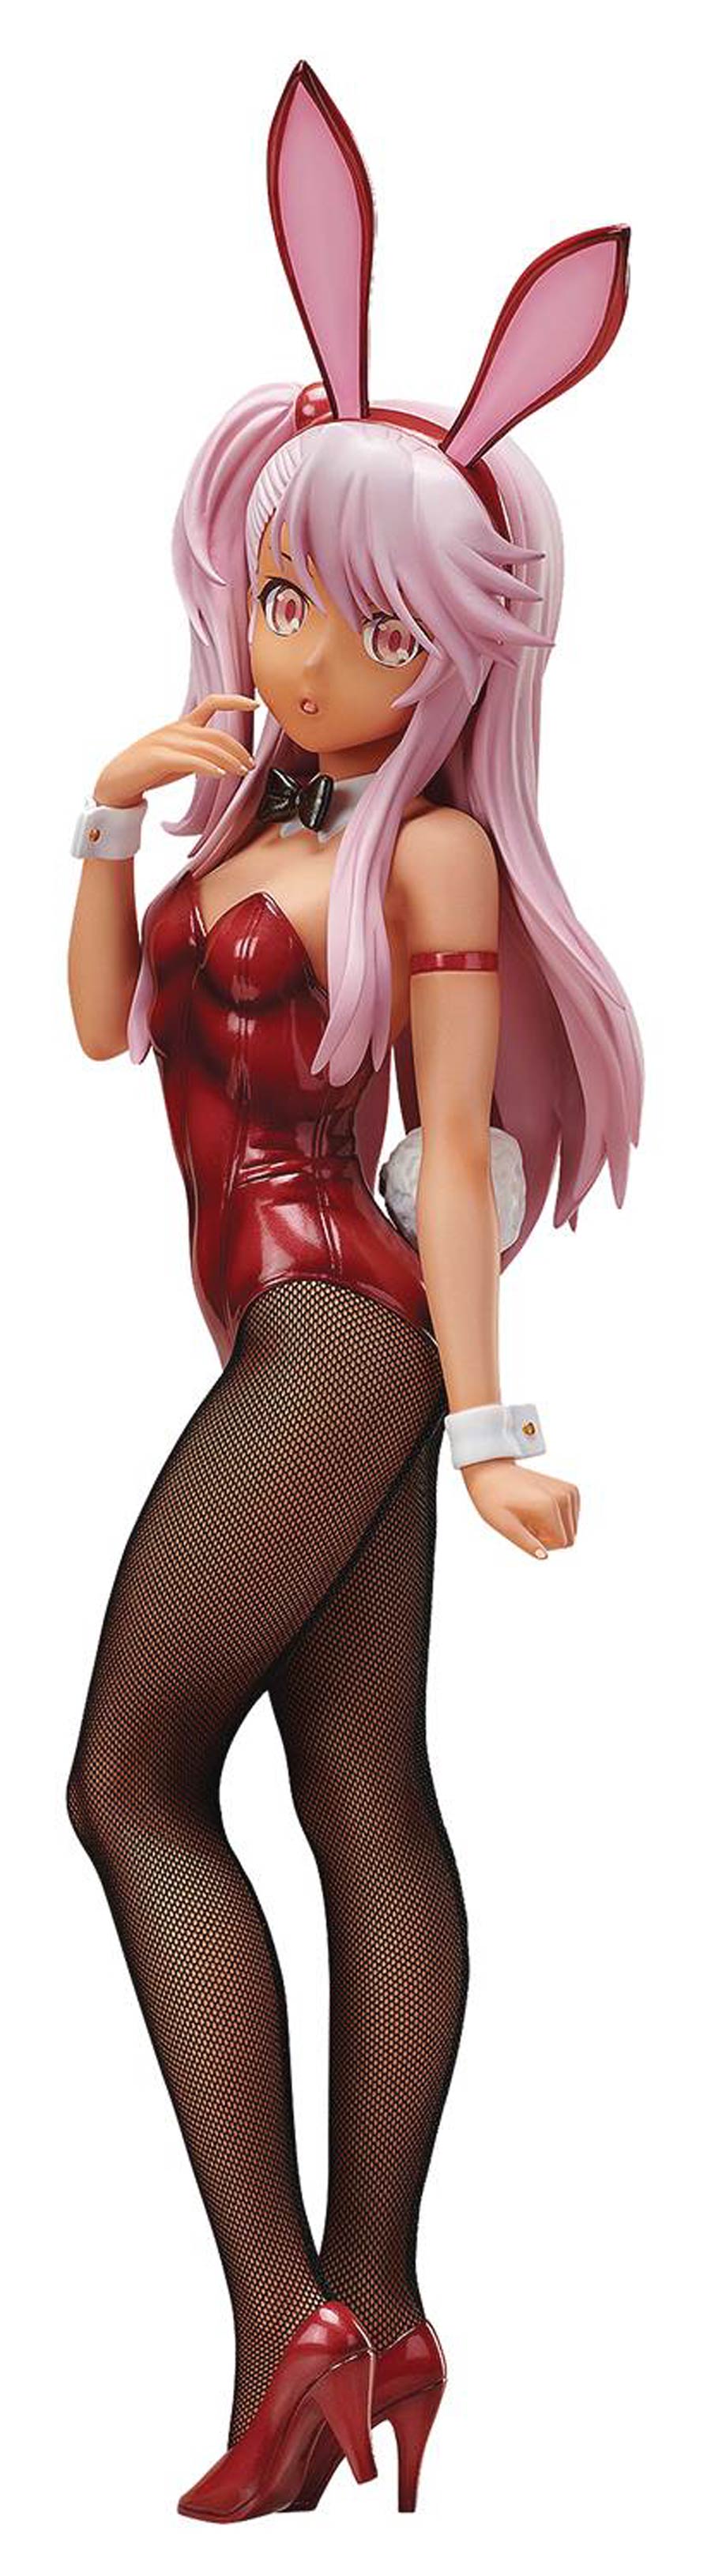 Fate/Kaleid Liner Prisma Illya Chloe Von Einzbern Bunny Outfit 1/4 Scale PVC Figure